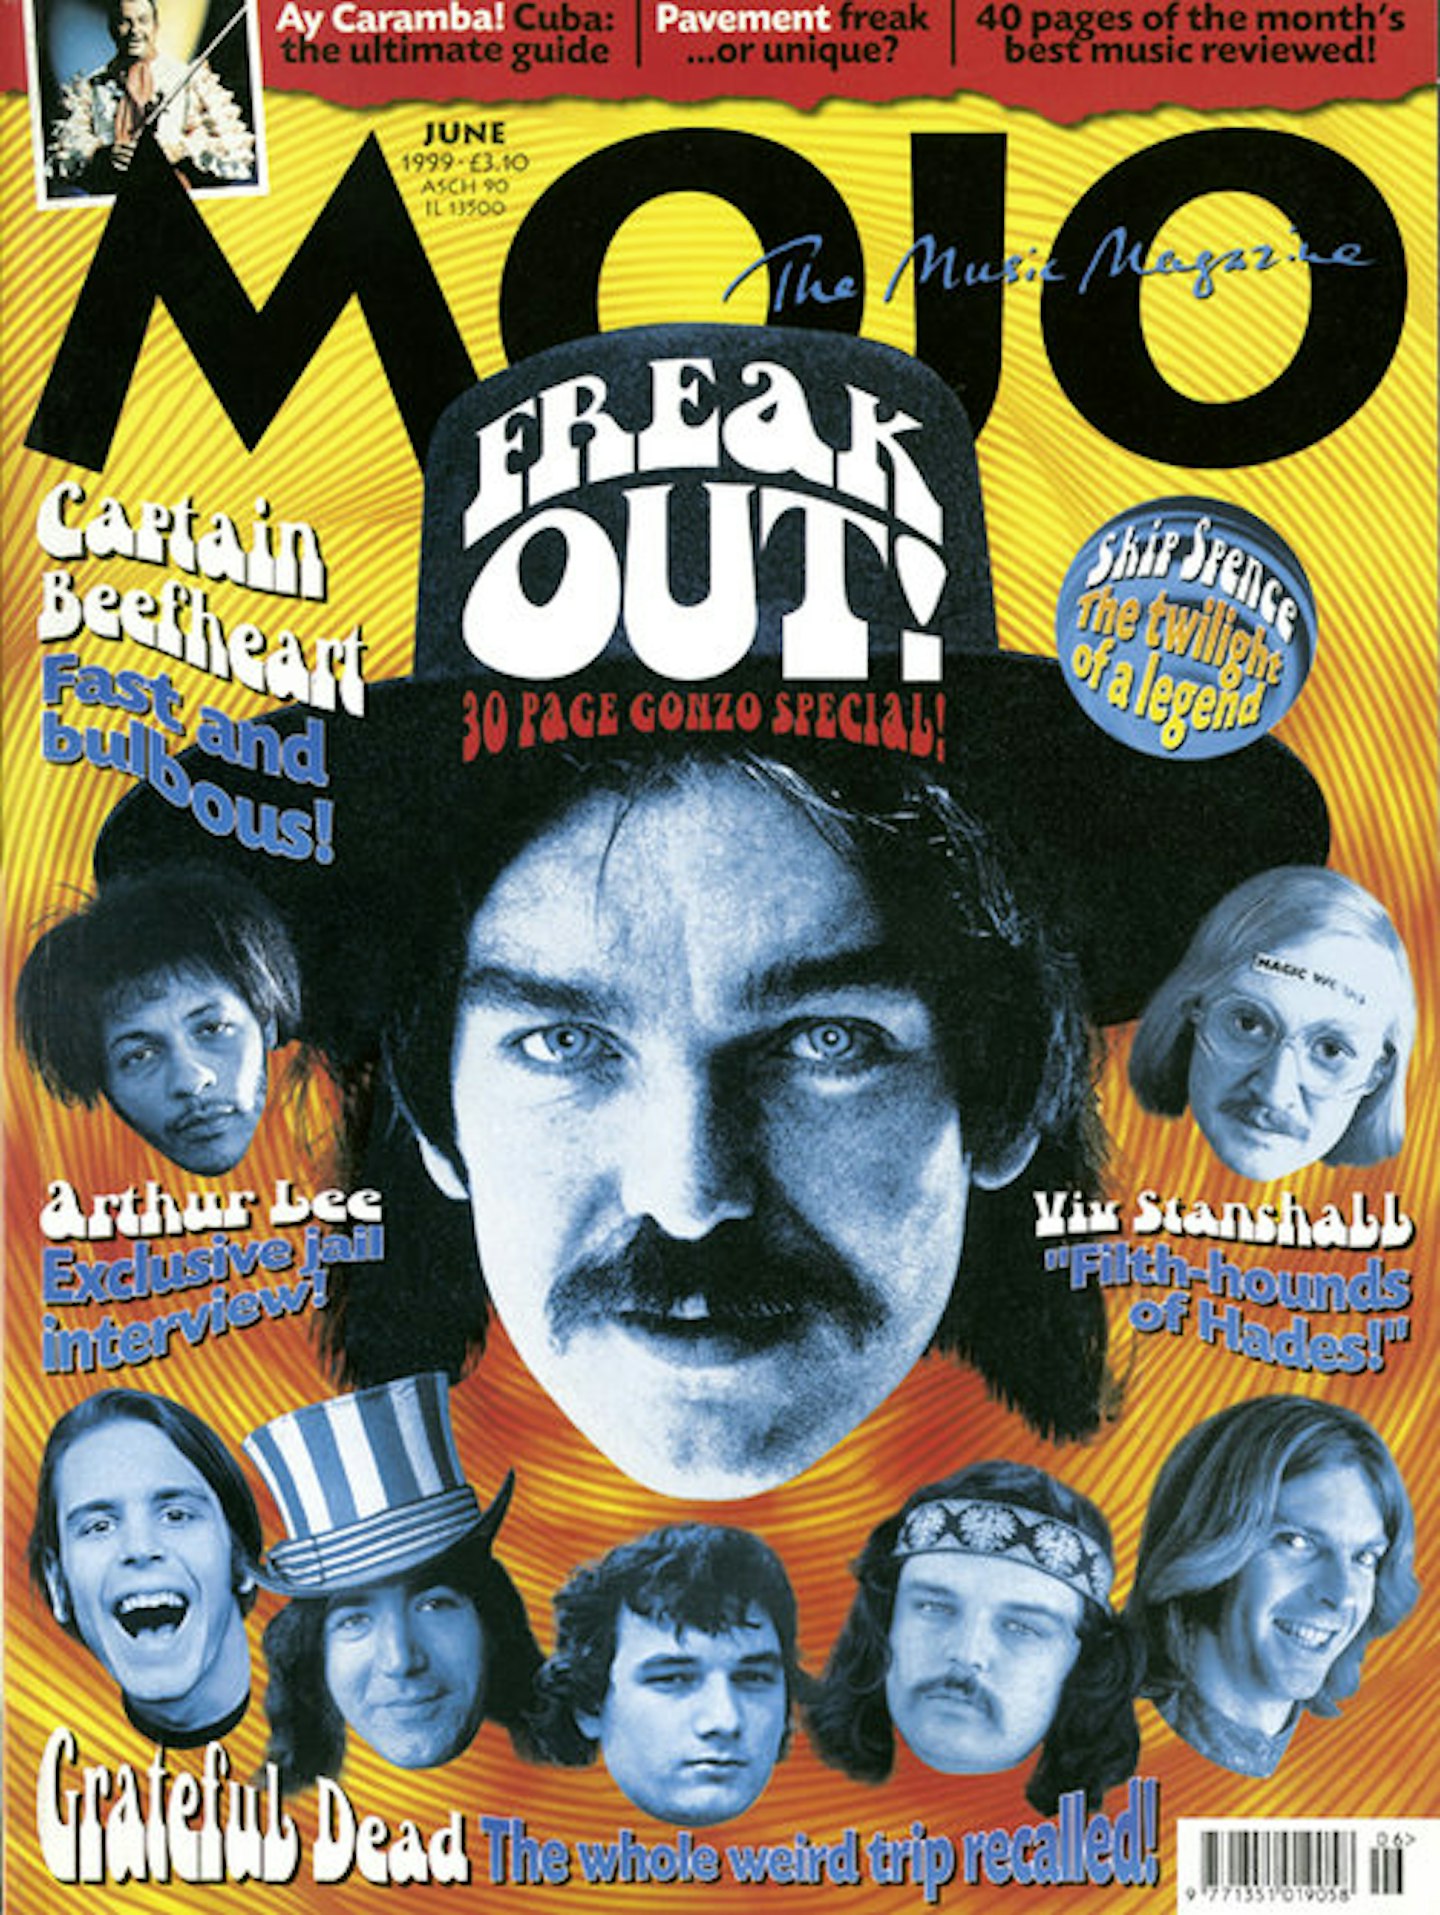 MOJO Issue 67 / June 1999